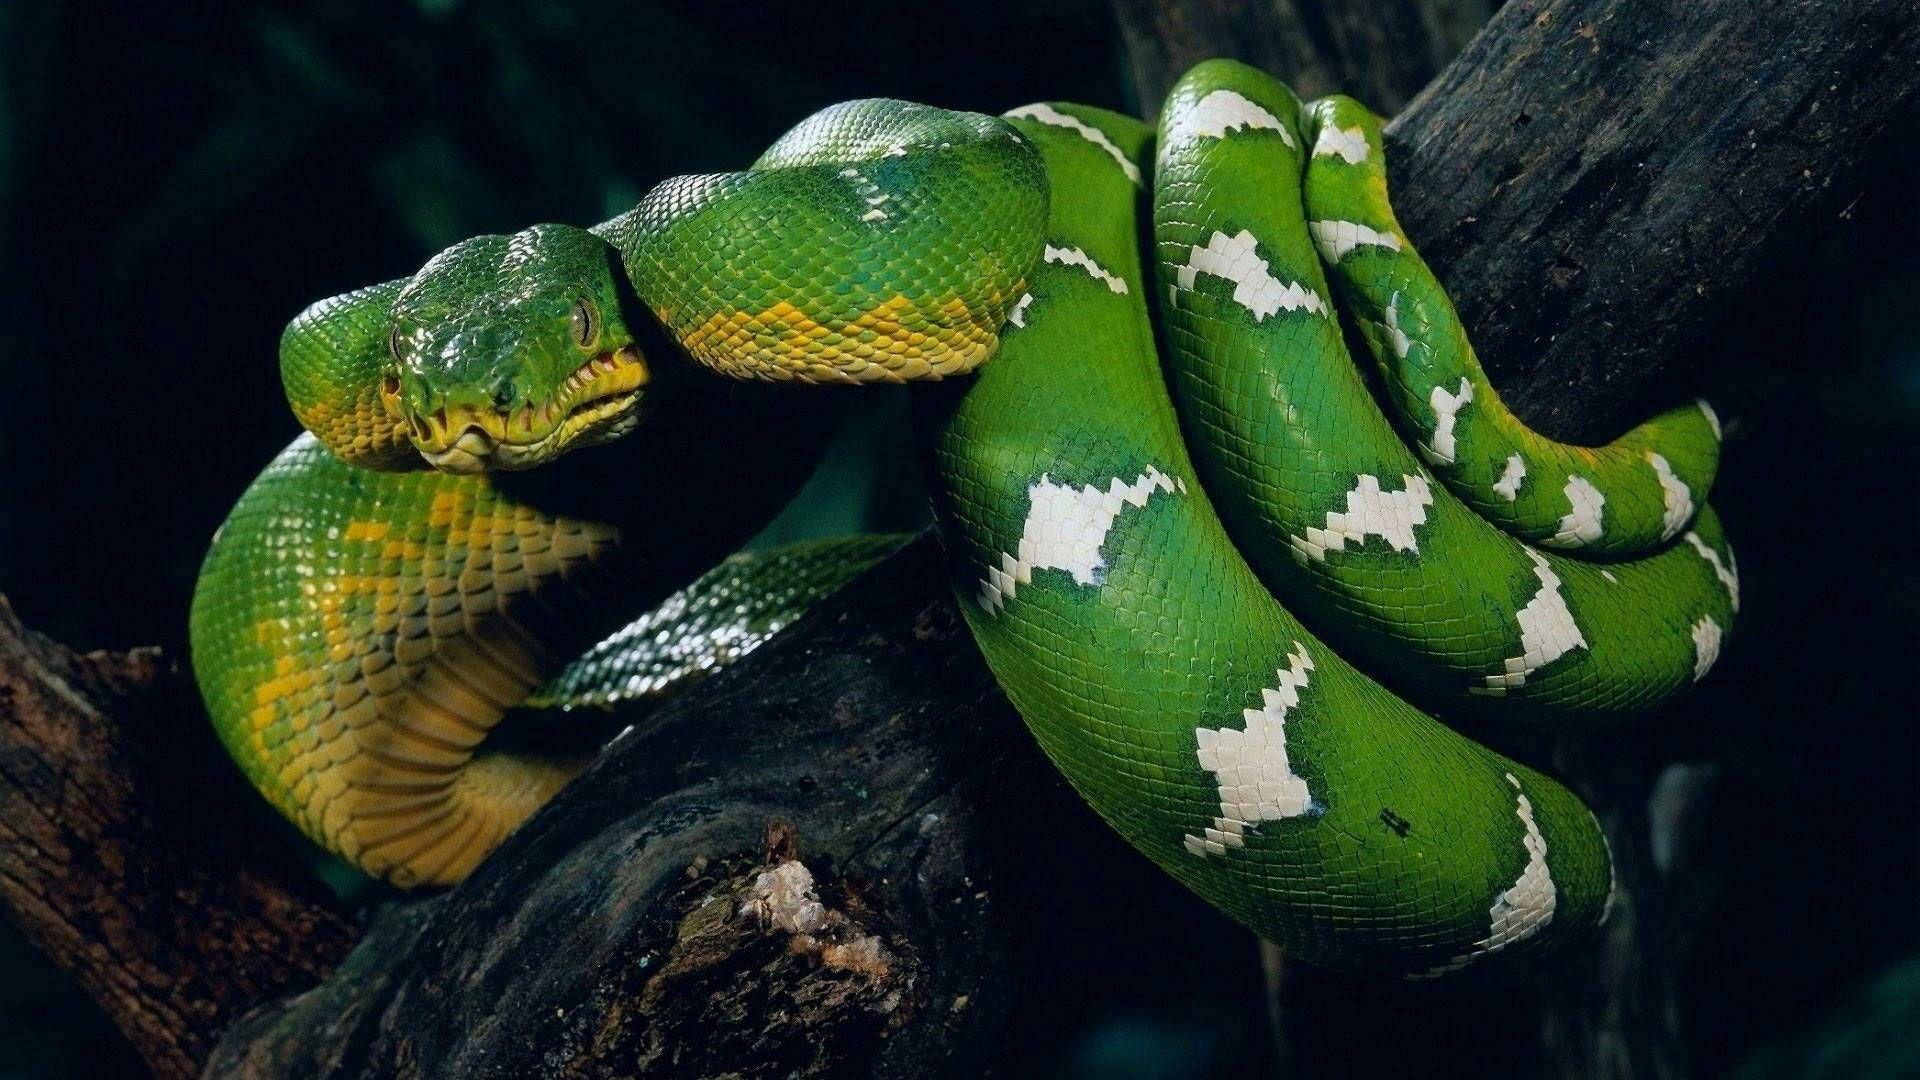 HD Wallpaper 1080p Boa Snake. Snake wallpaper, Green anaconda